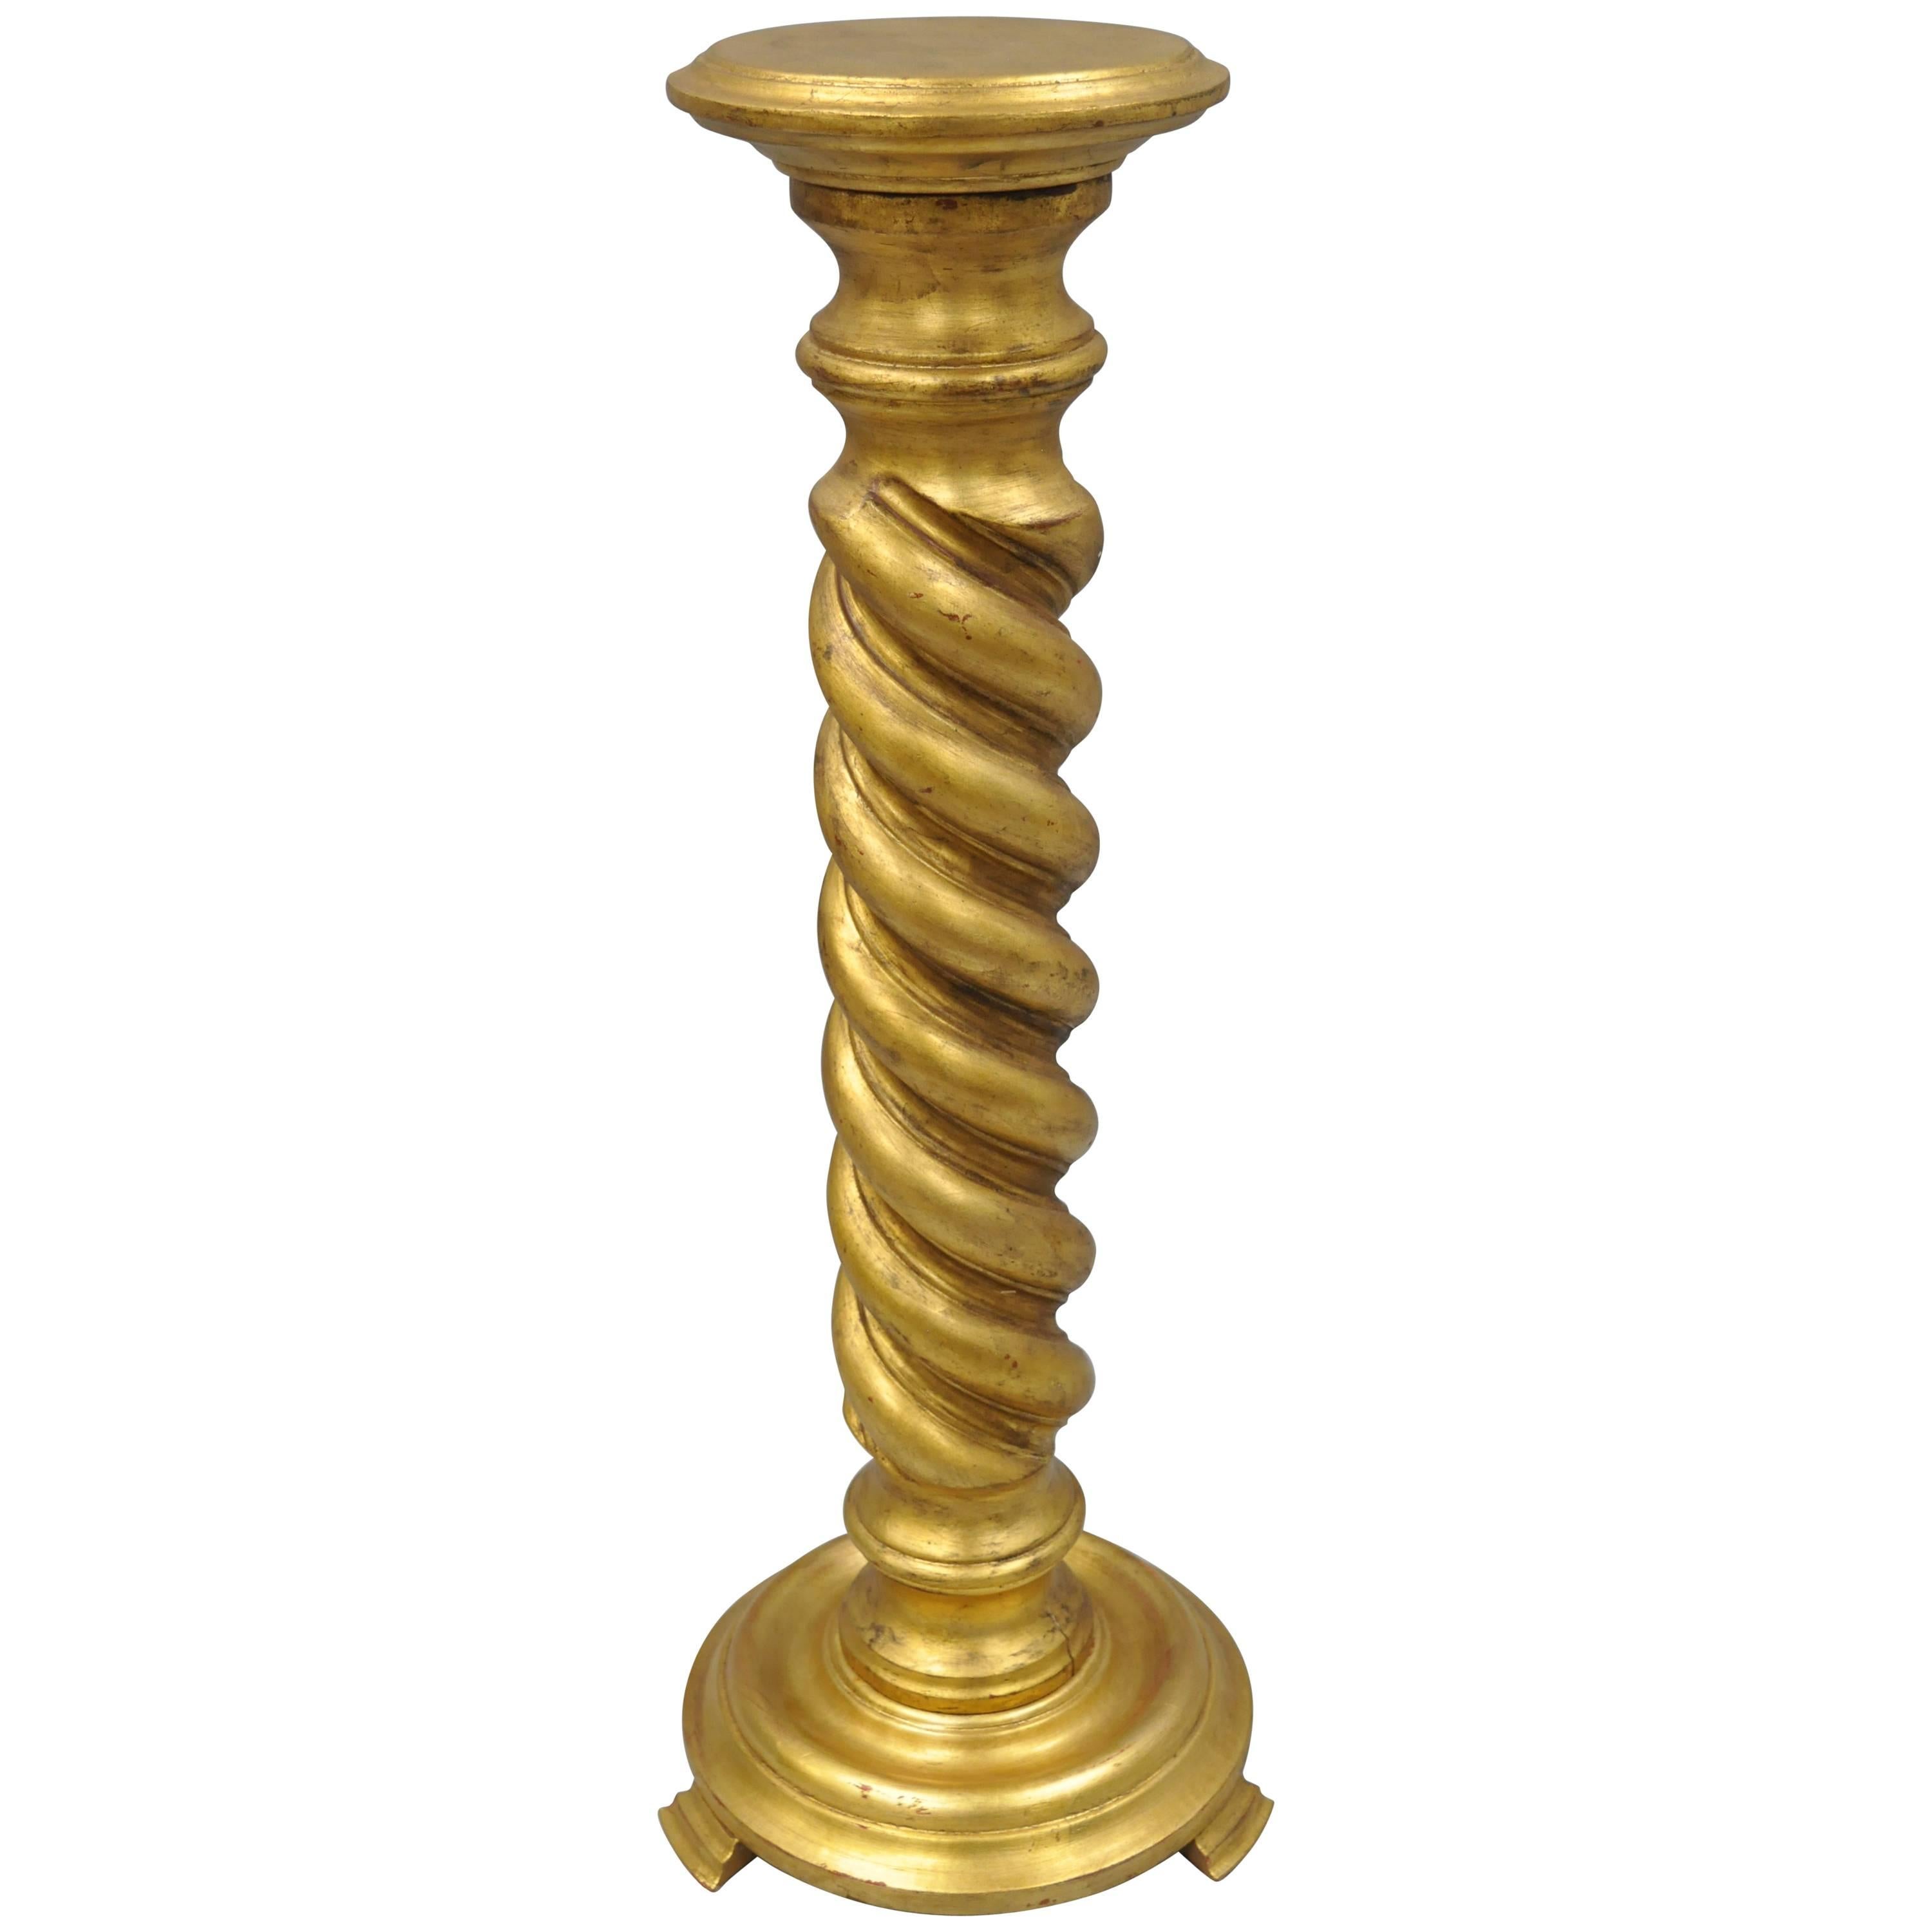 Italian Gold Leaf Spiral Carved Column Pedestal Stand Barley Twist Solid Wood